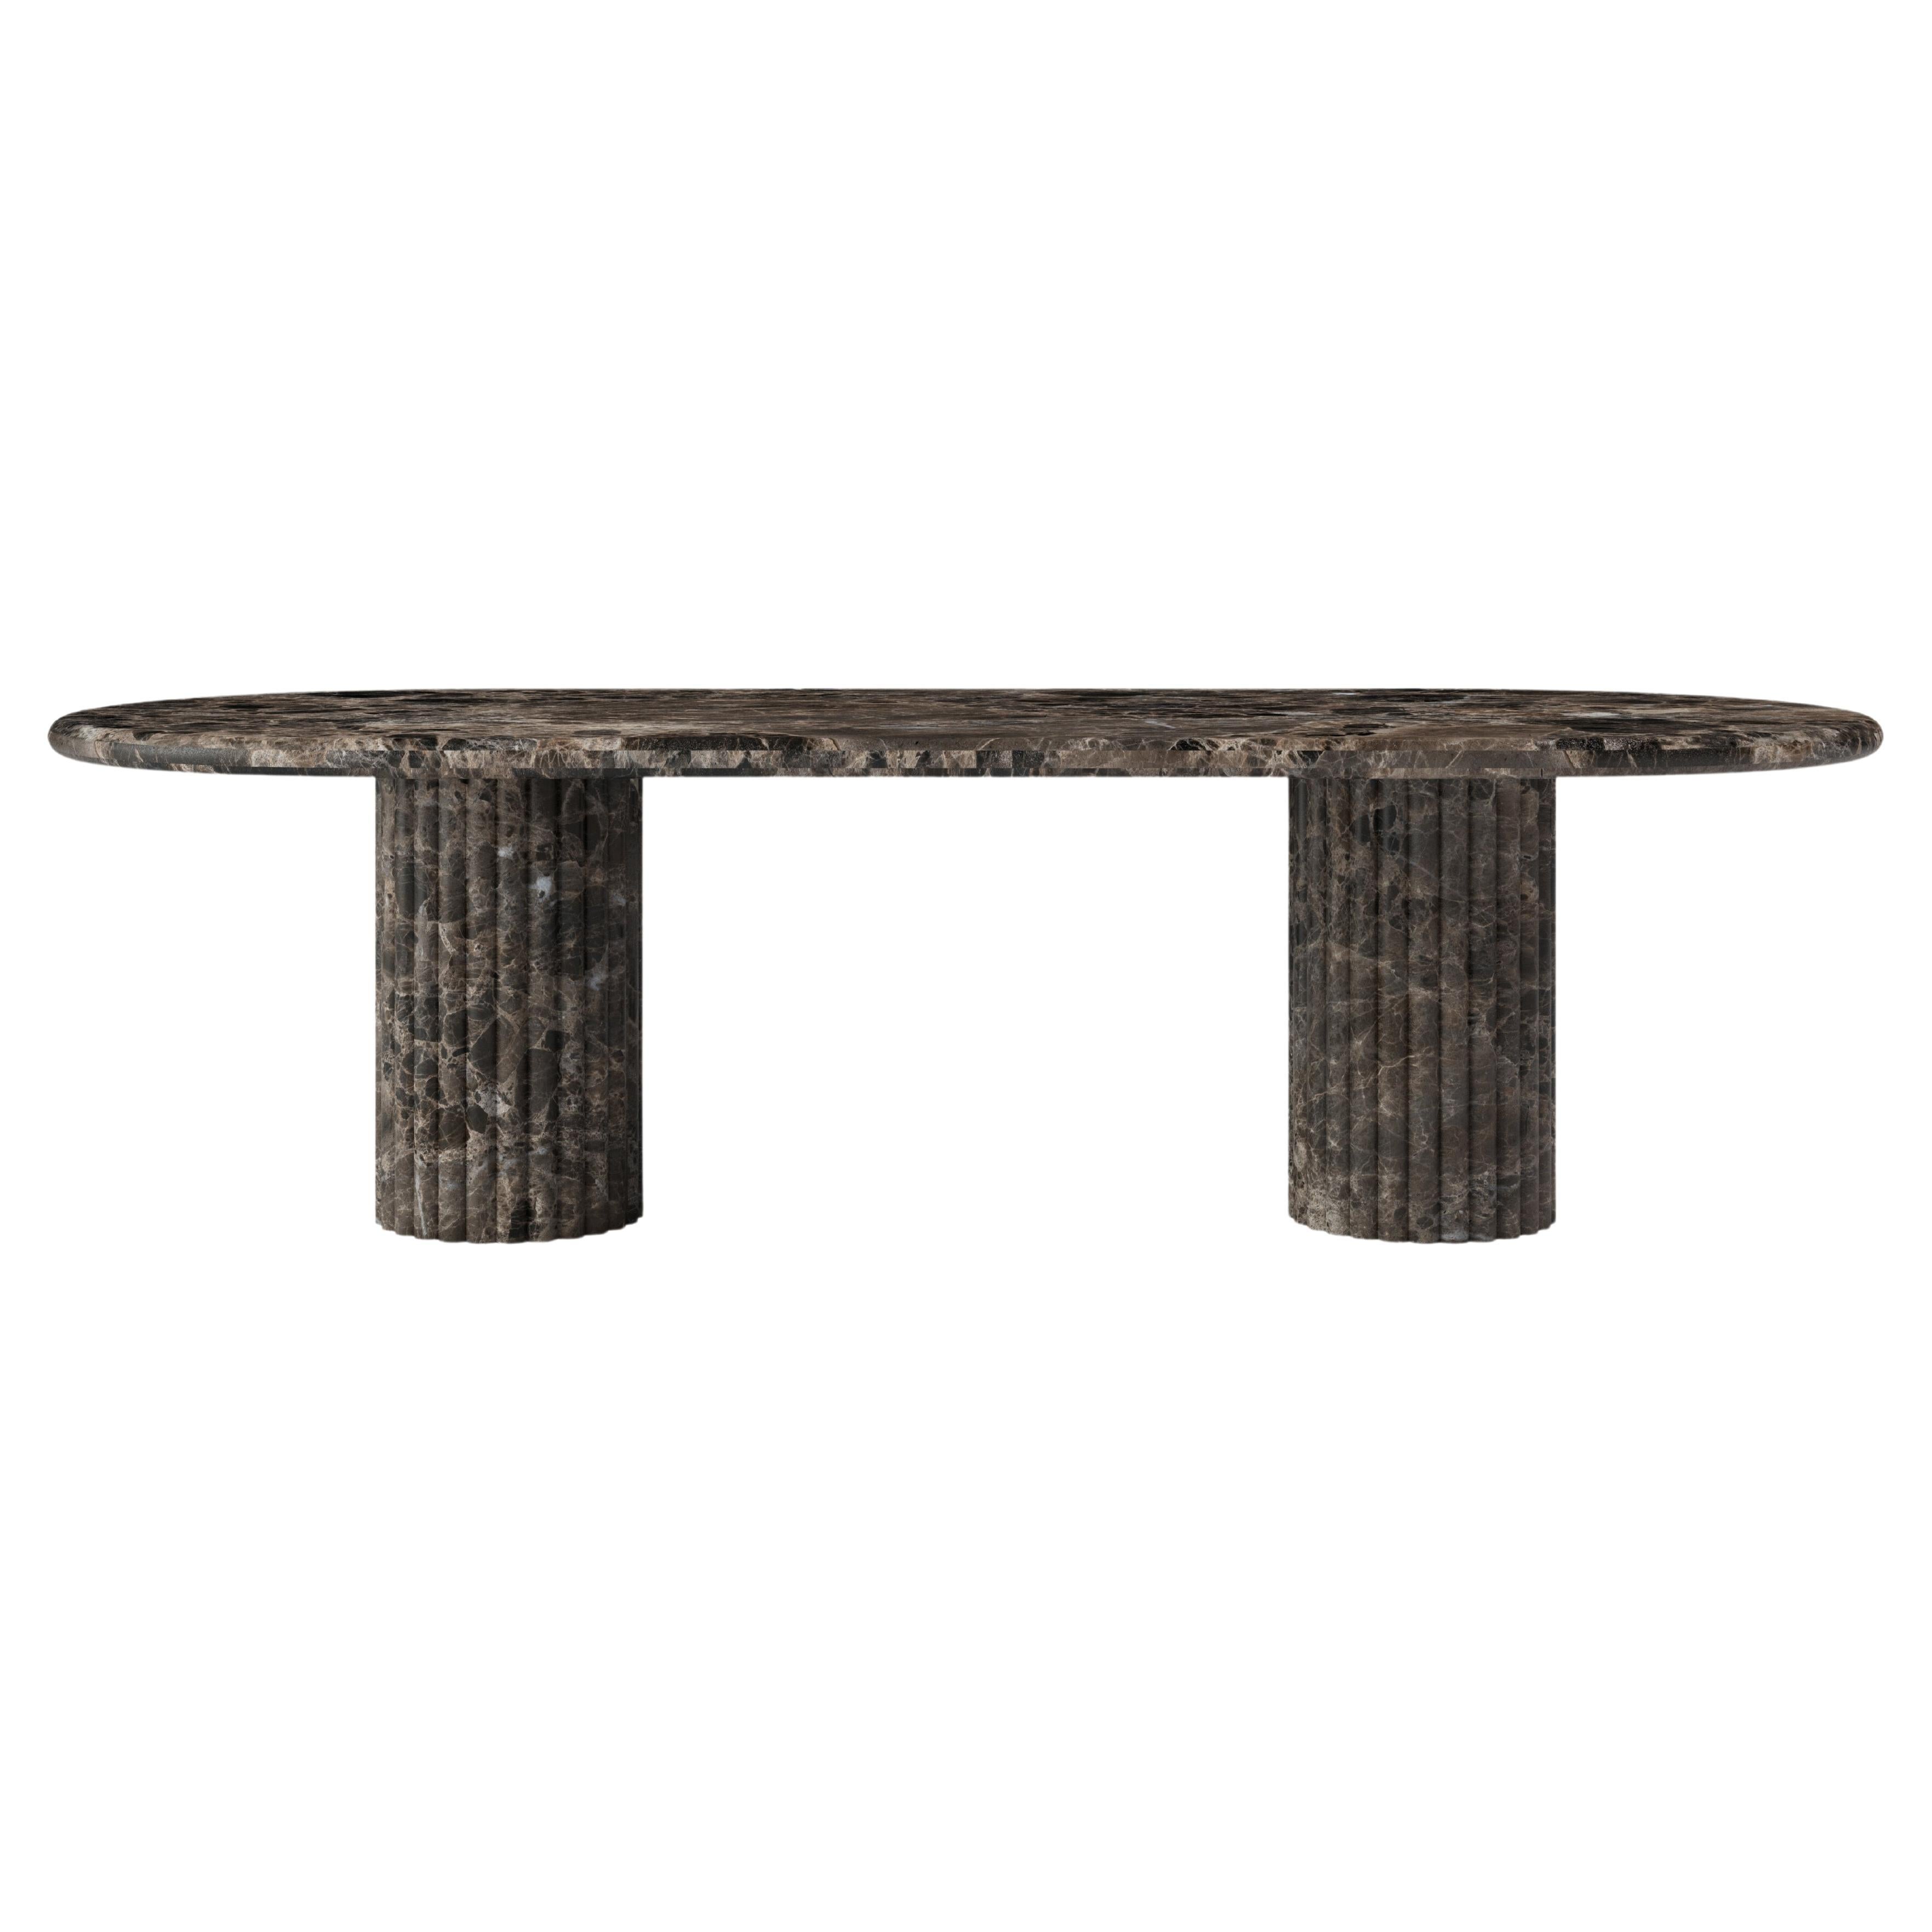 FORM(LA) Fluta Oval Dining Table 96”L x 42”W x 30”H Dark Emperador Marble